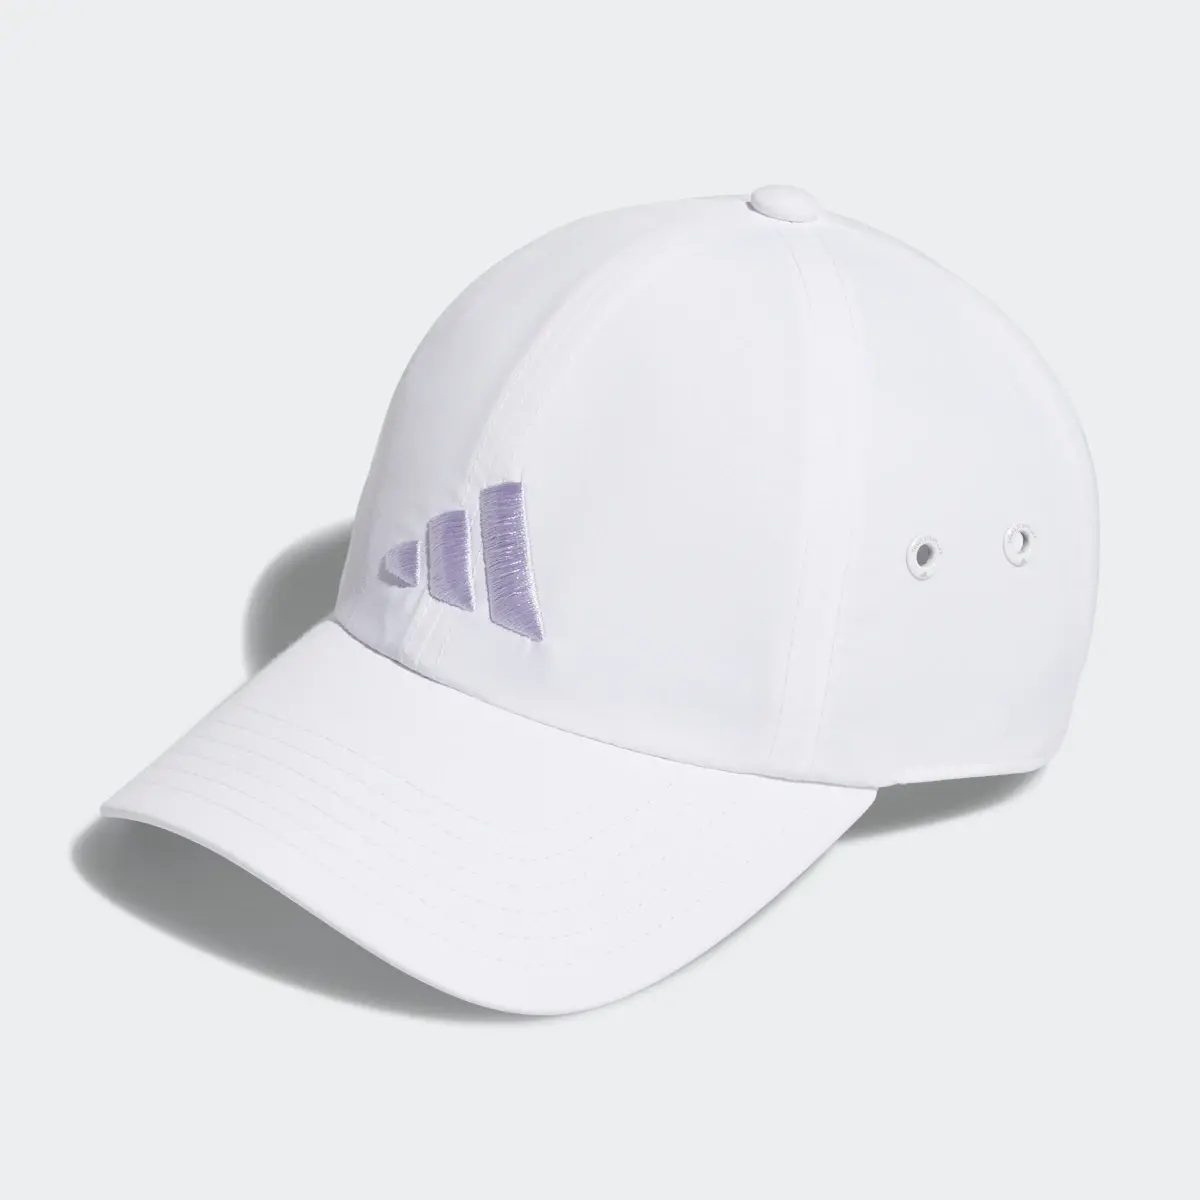 Adidas Influencer 3 Hat. 2